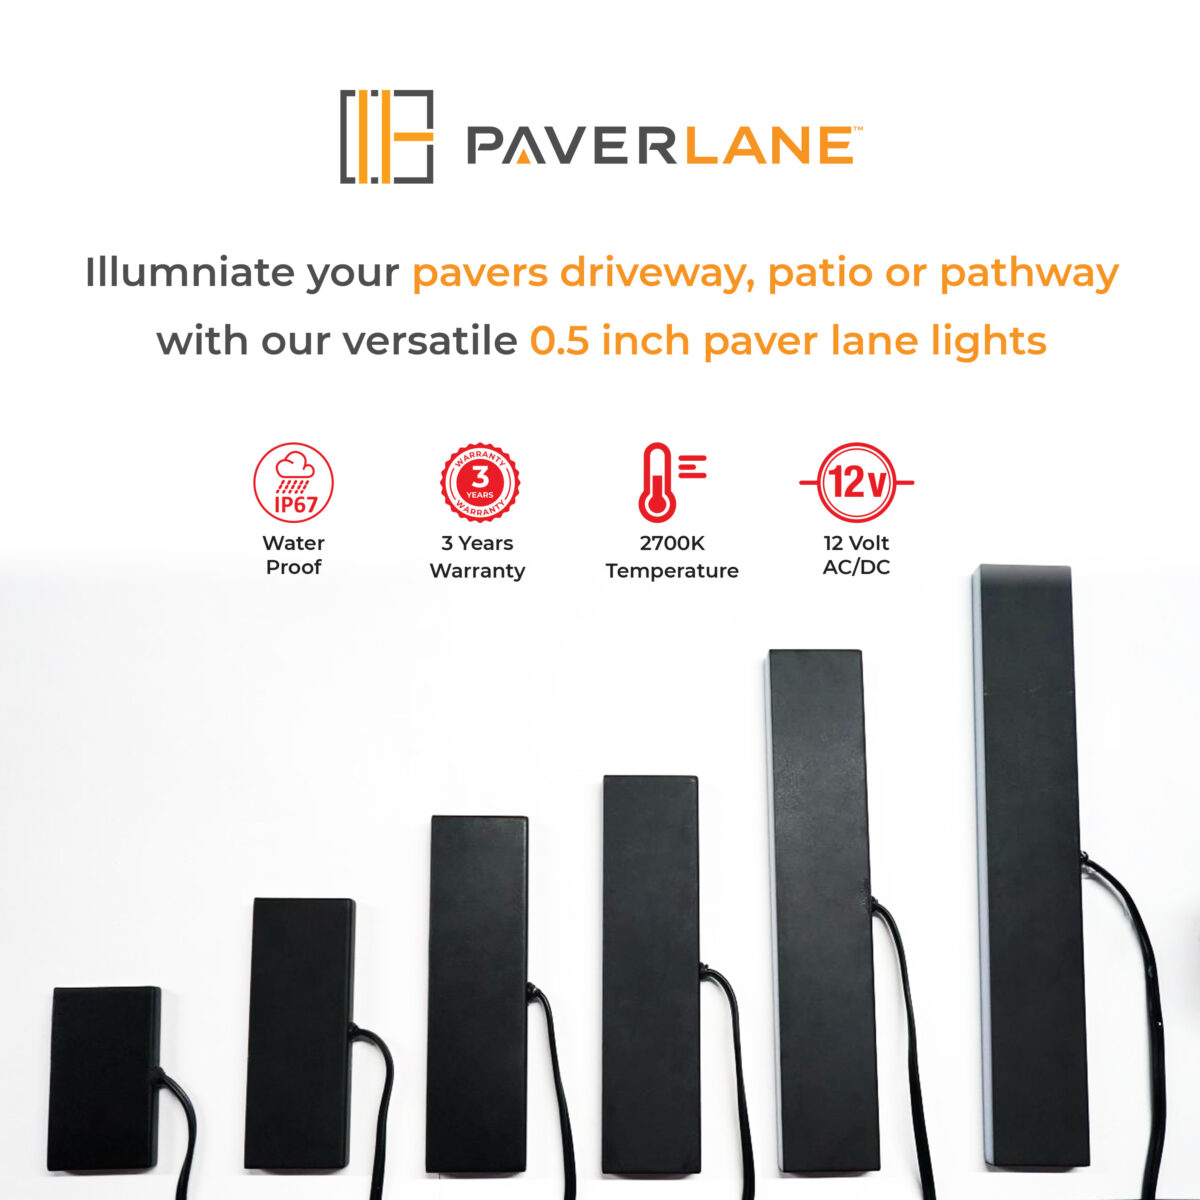 Lumengy Paver Lane Lights: Versatile Design with Black Cable